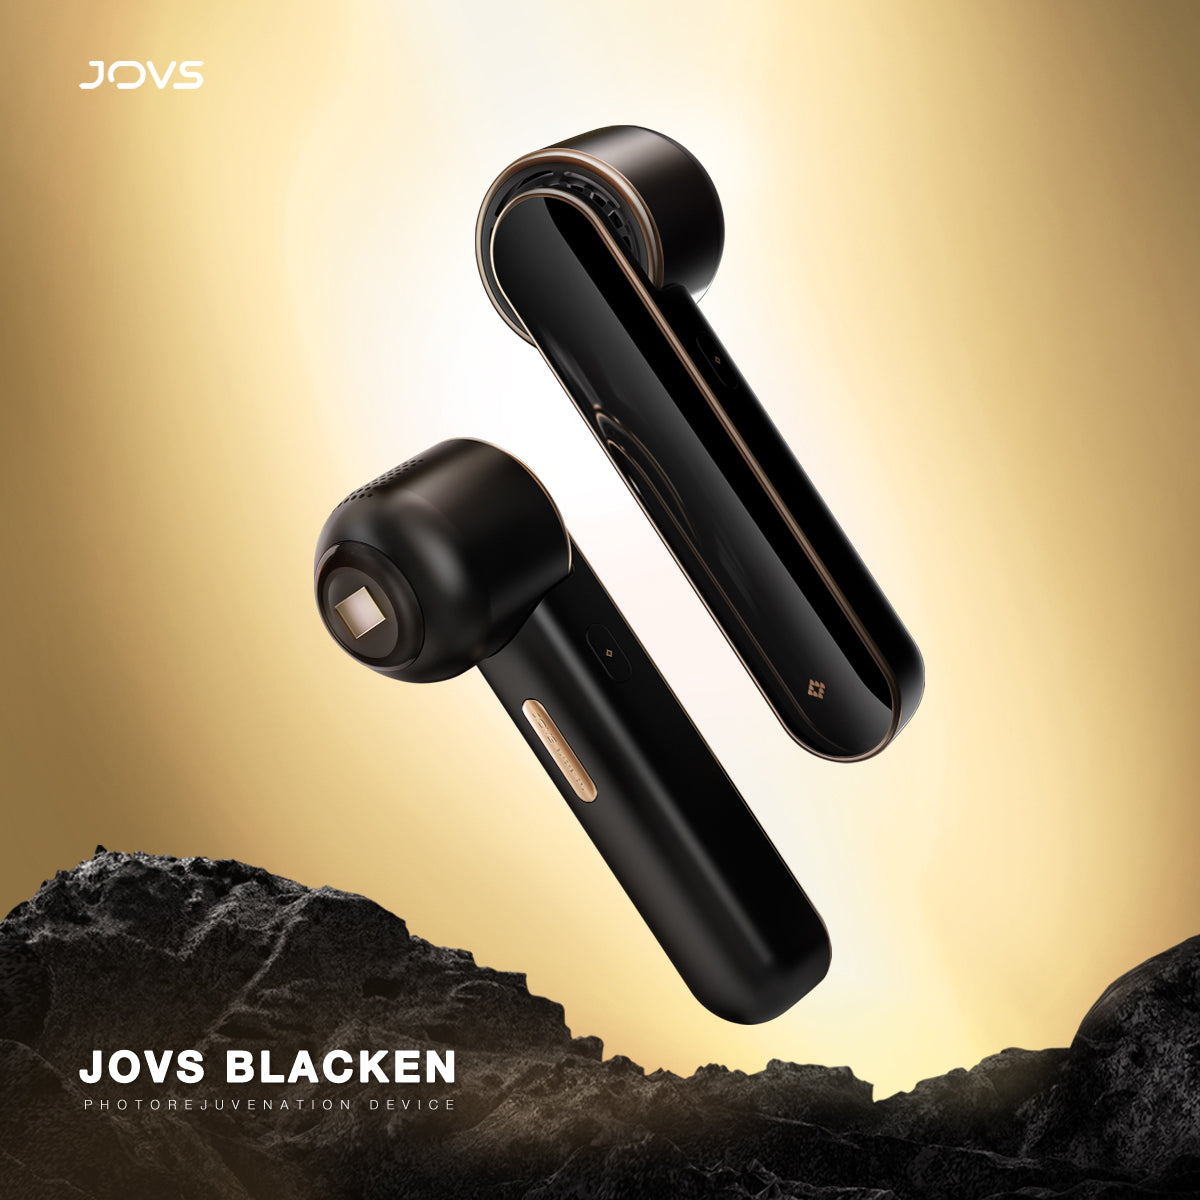 Front and back views of the JOVS Blacken DPL Photofacial Device, highlighting its sleek design.